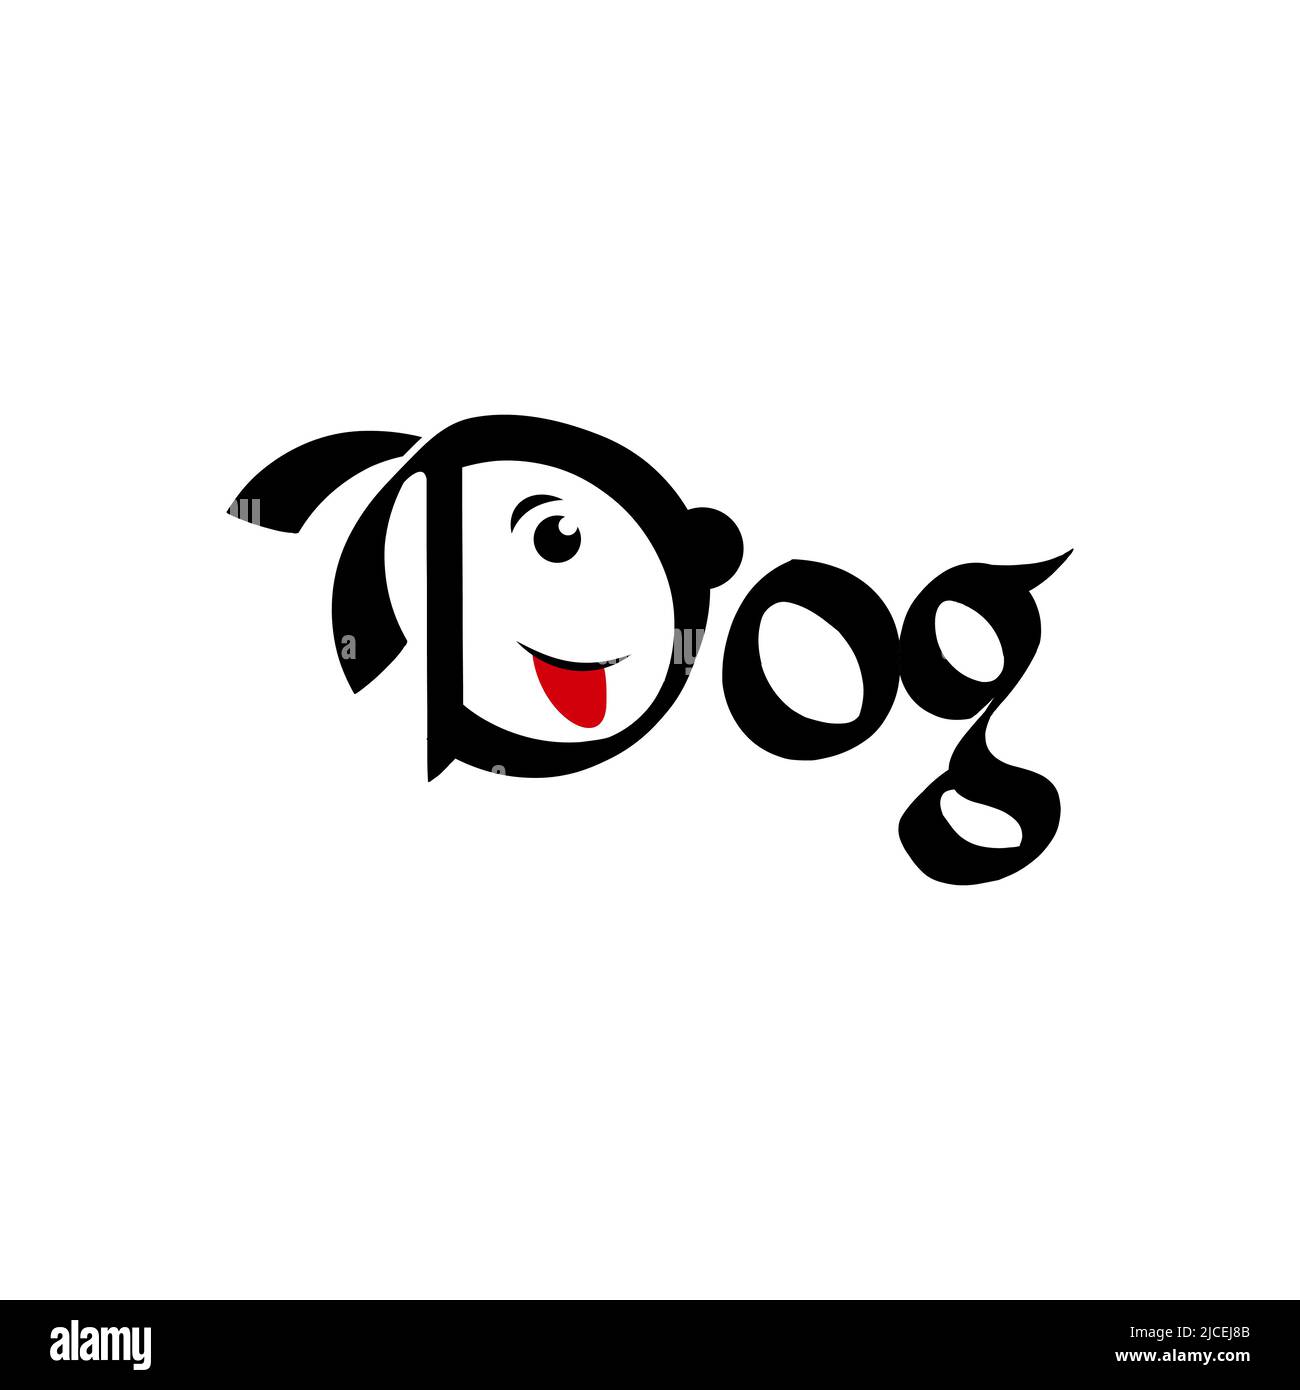 Dog head logo design inspiration on dog text. Stock Vector